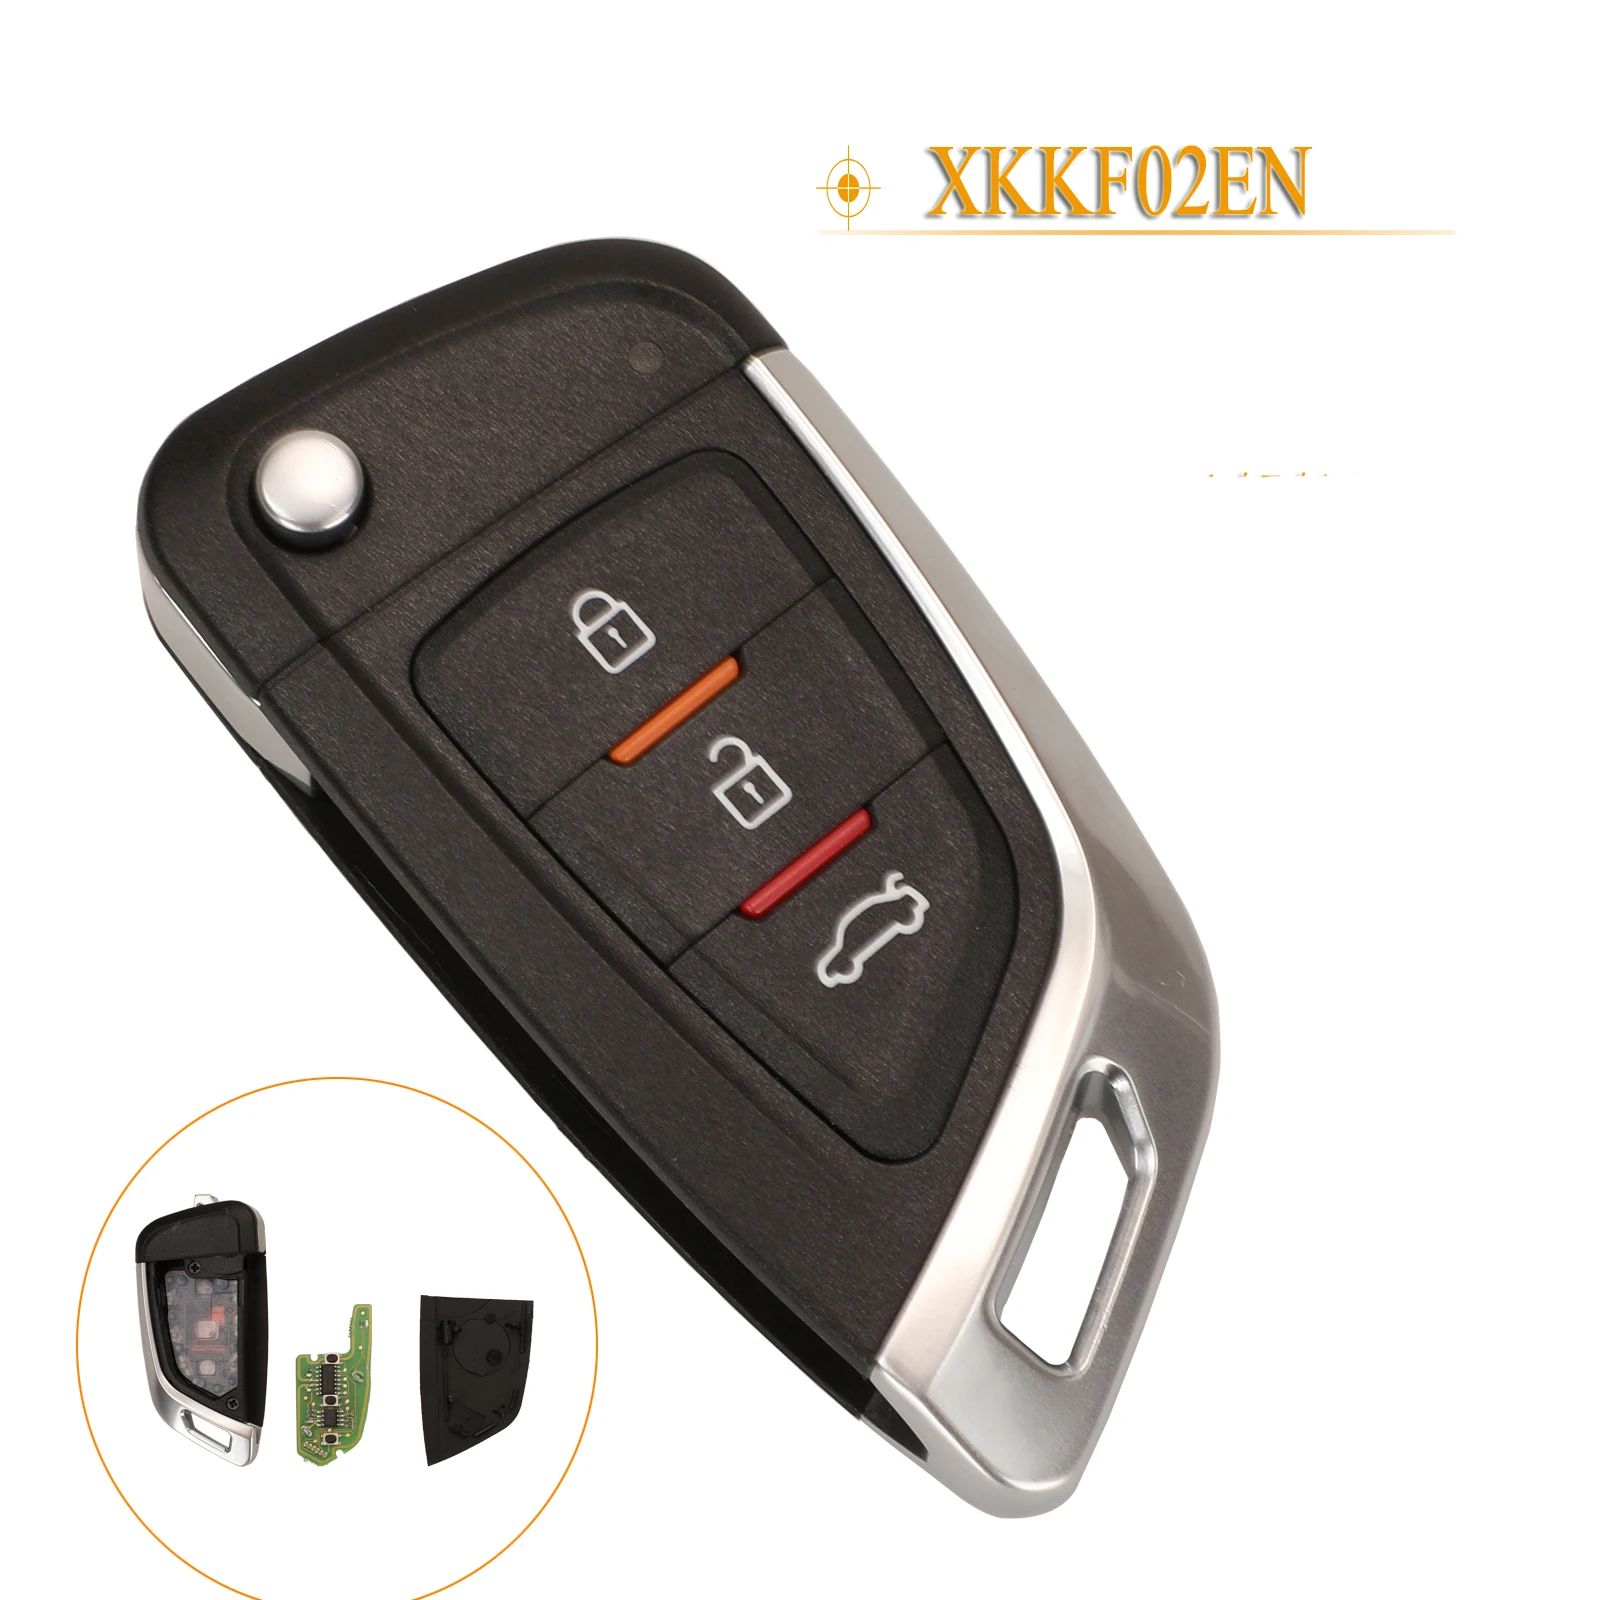 

jingyuqin 3 Buttons Universal Remote Control Car Key For Xhorse VVDI/VVDI 2 Fob XKKF02EN